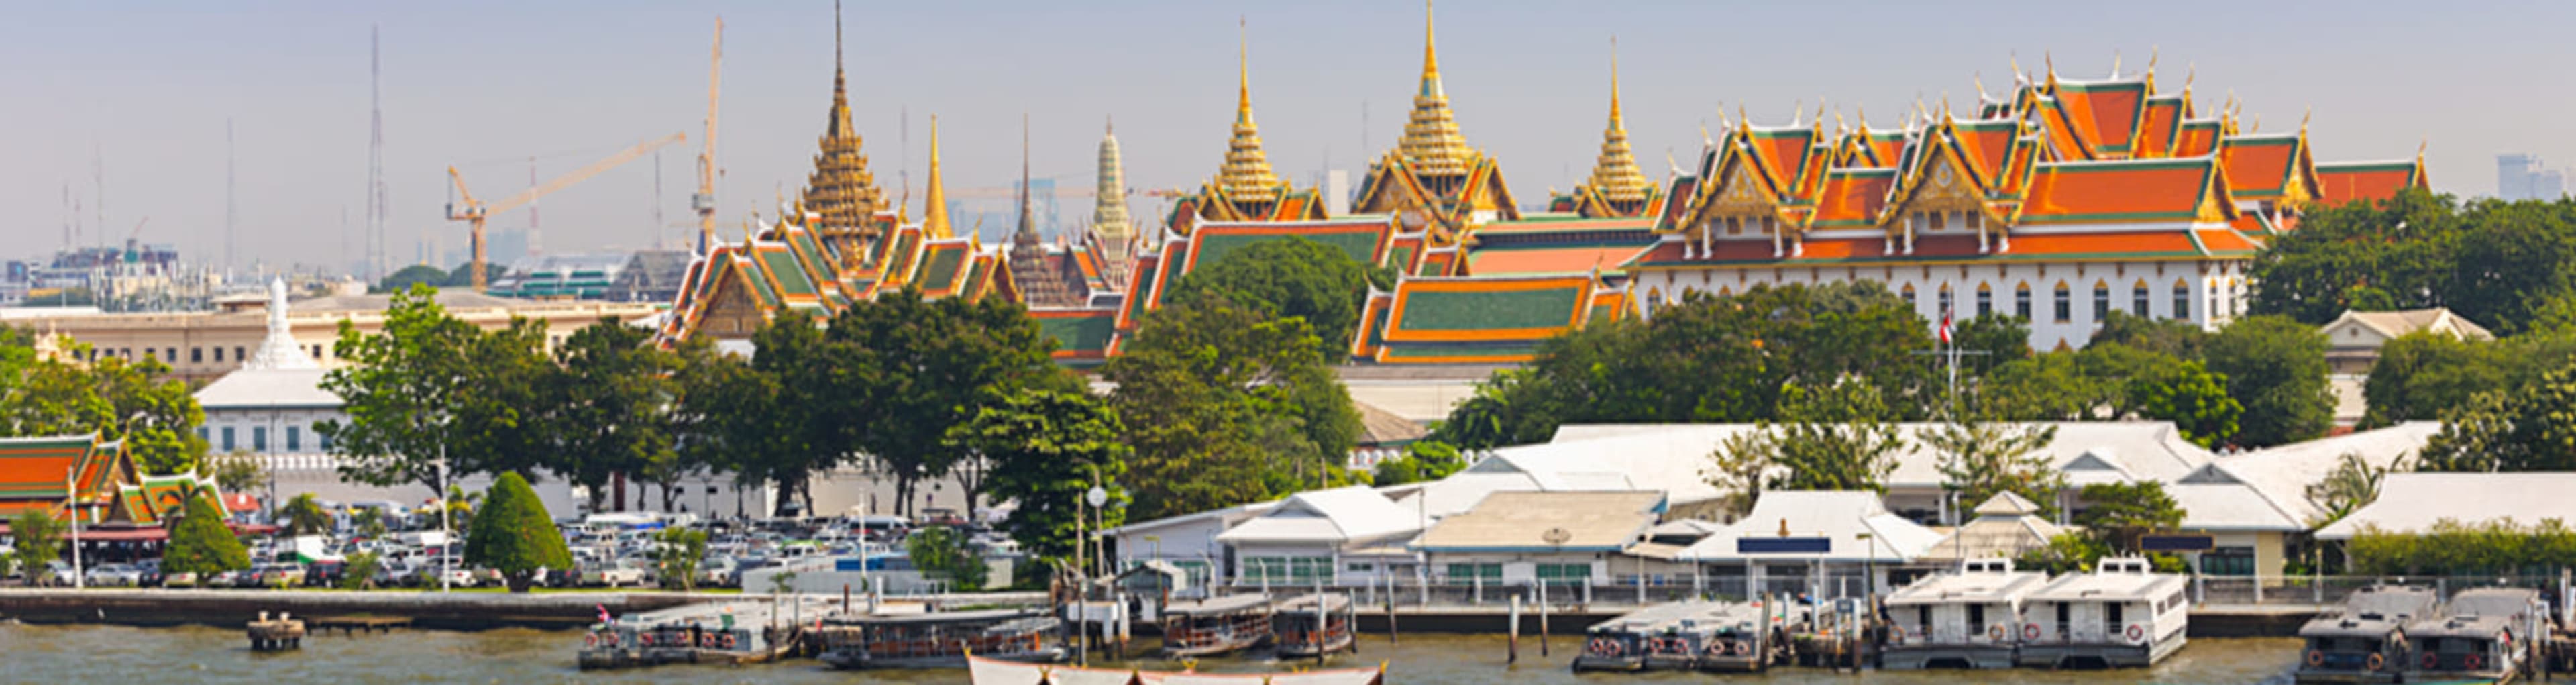 The Grand Palace viewed across the Chao Phraya river in Bangkok.